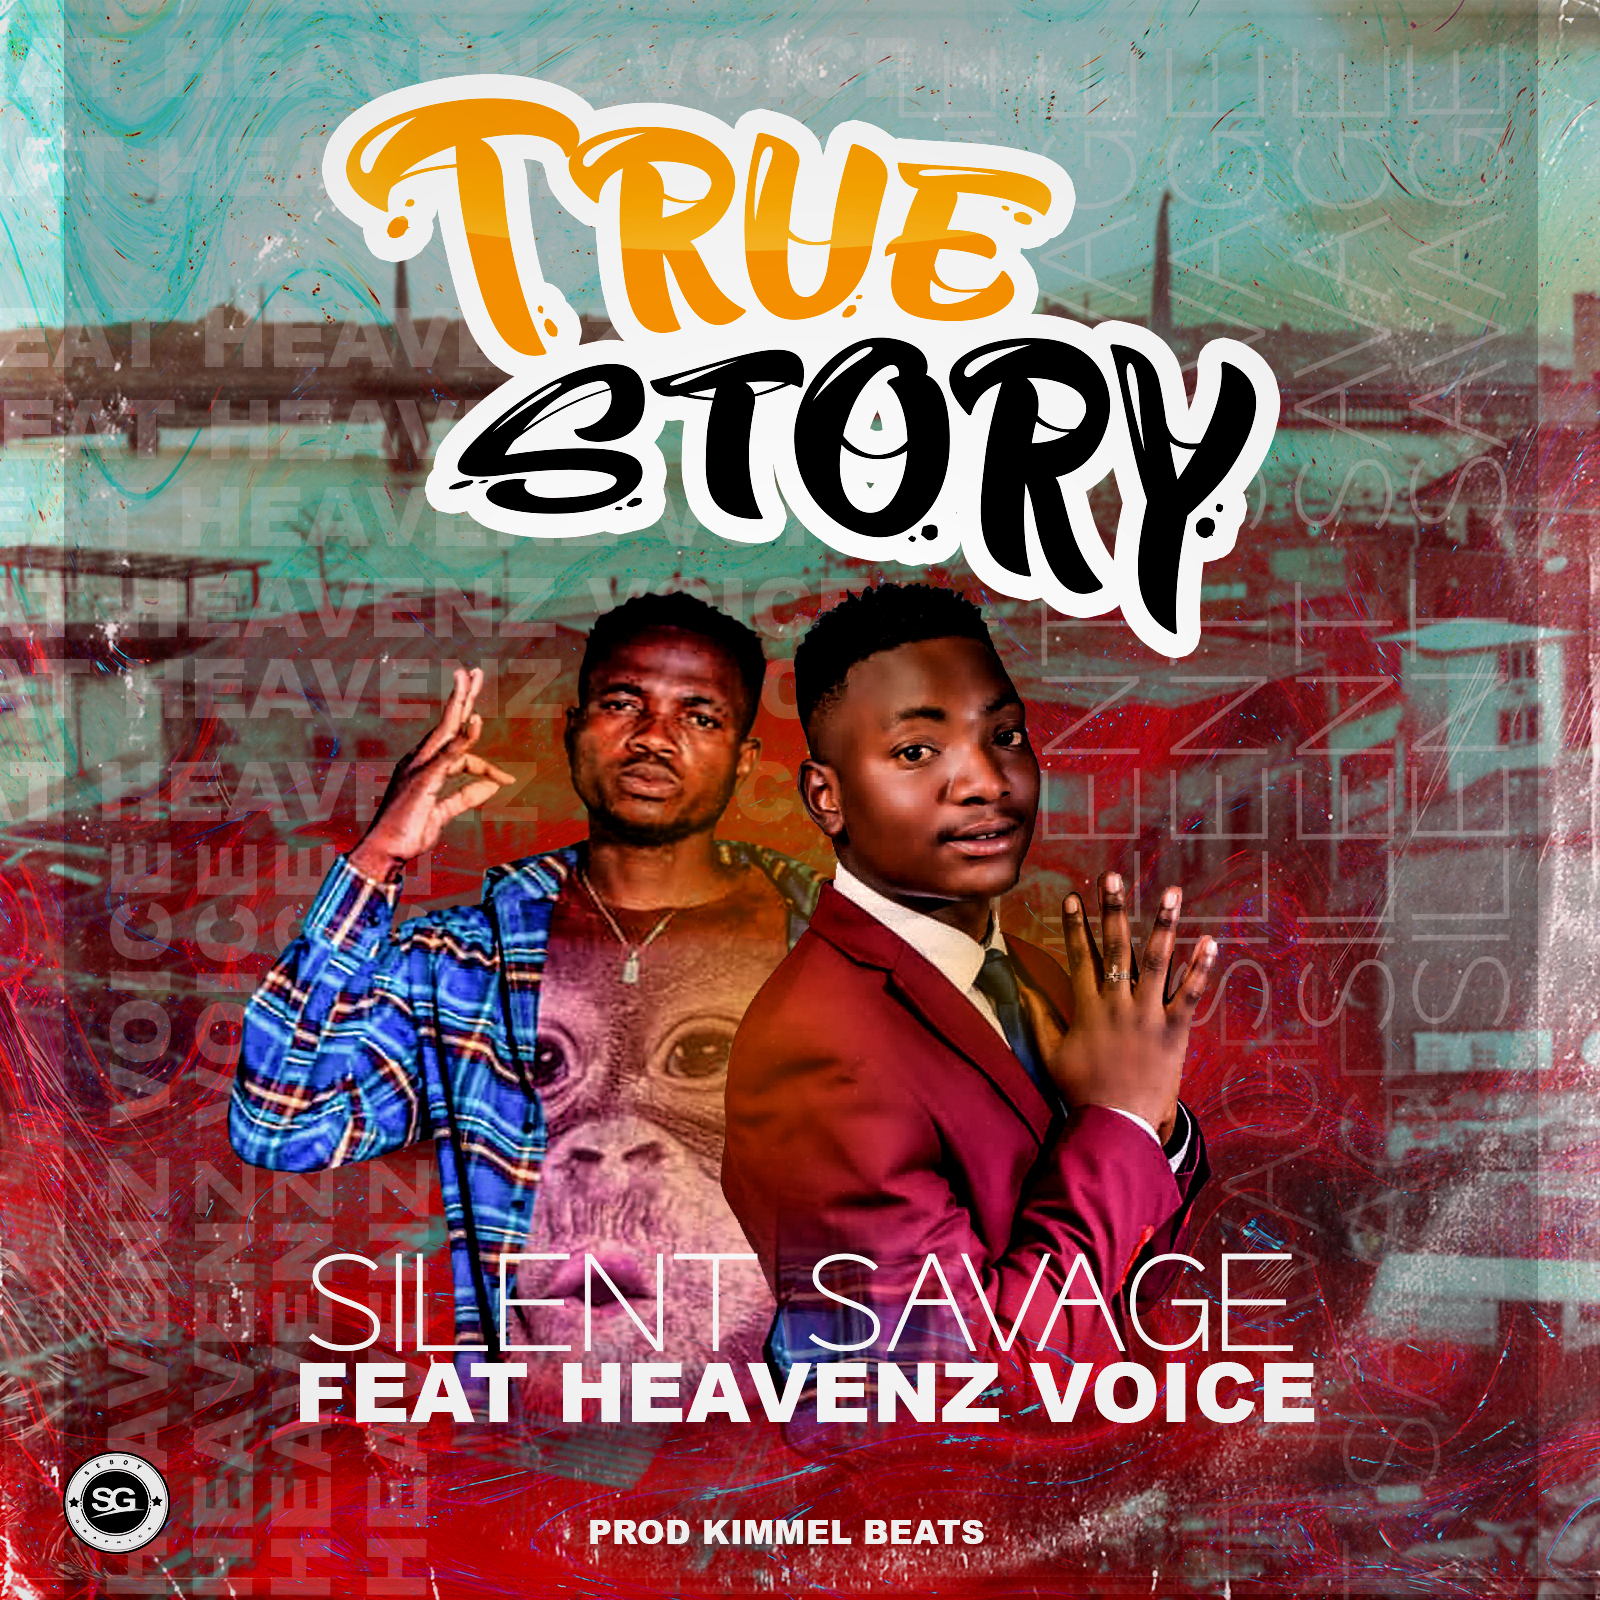 Silent Savage Ft Heavenz Voice - True Story